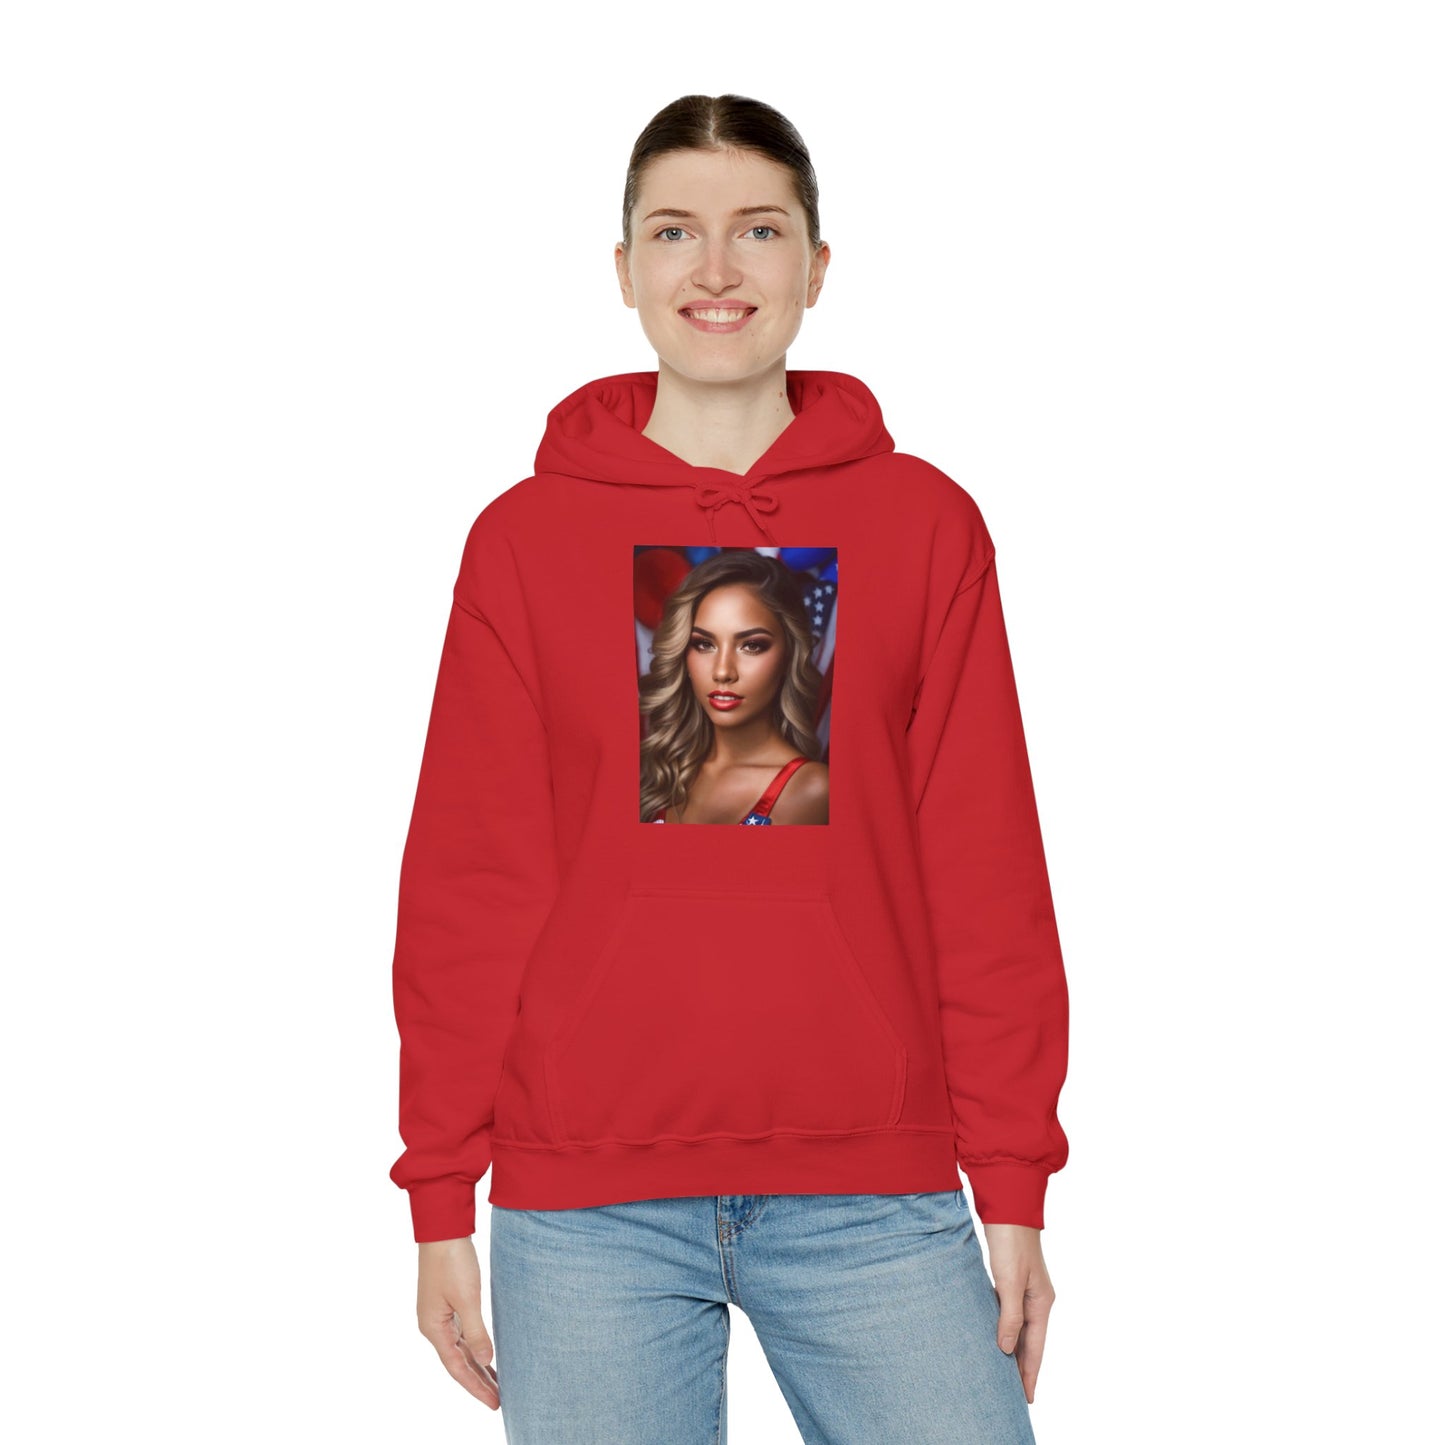 American Woman Hooded Sweatshirt